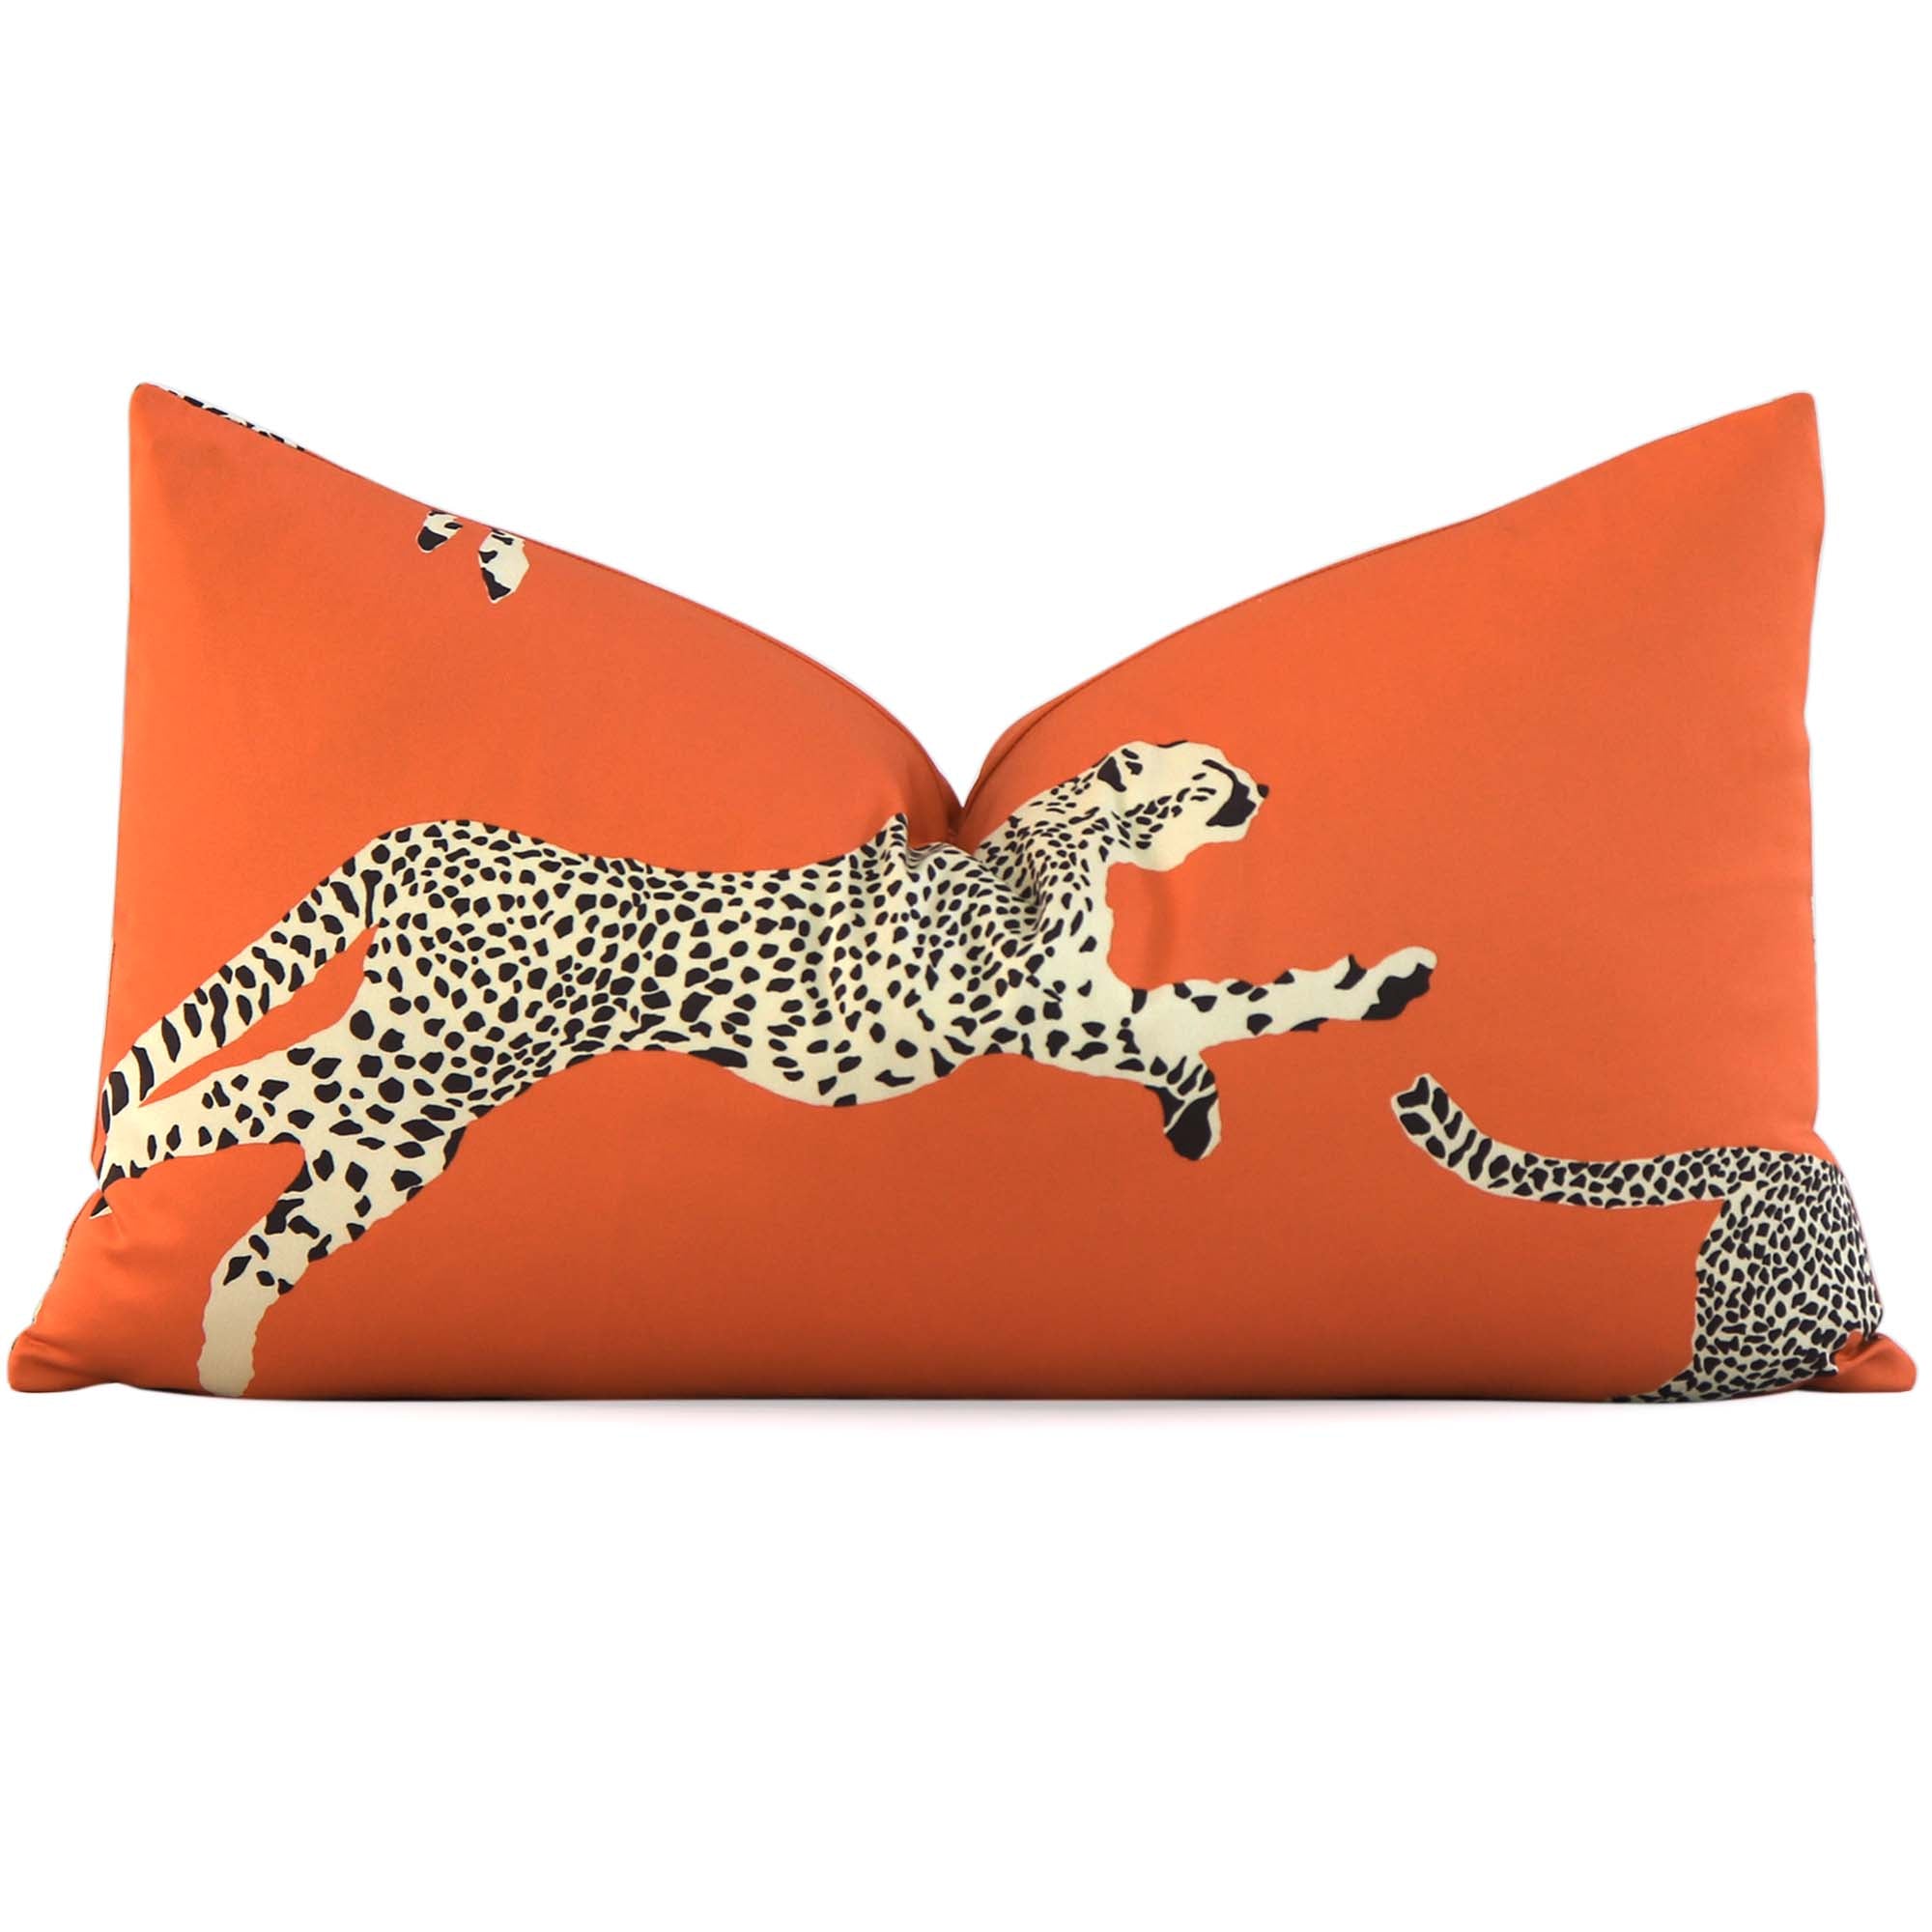 Scalamandre Leaping Cheetah Clementine Orange Luxury Lumbar Throw Pillow Cover